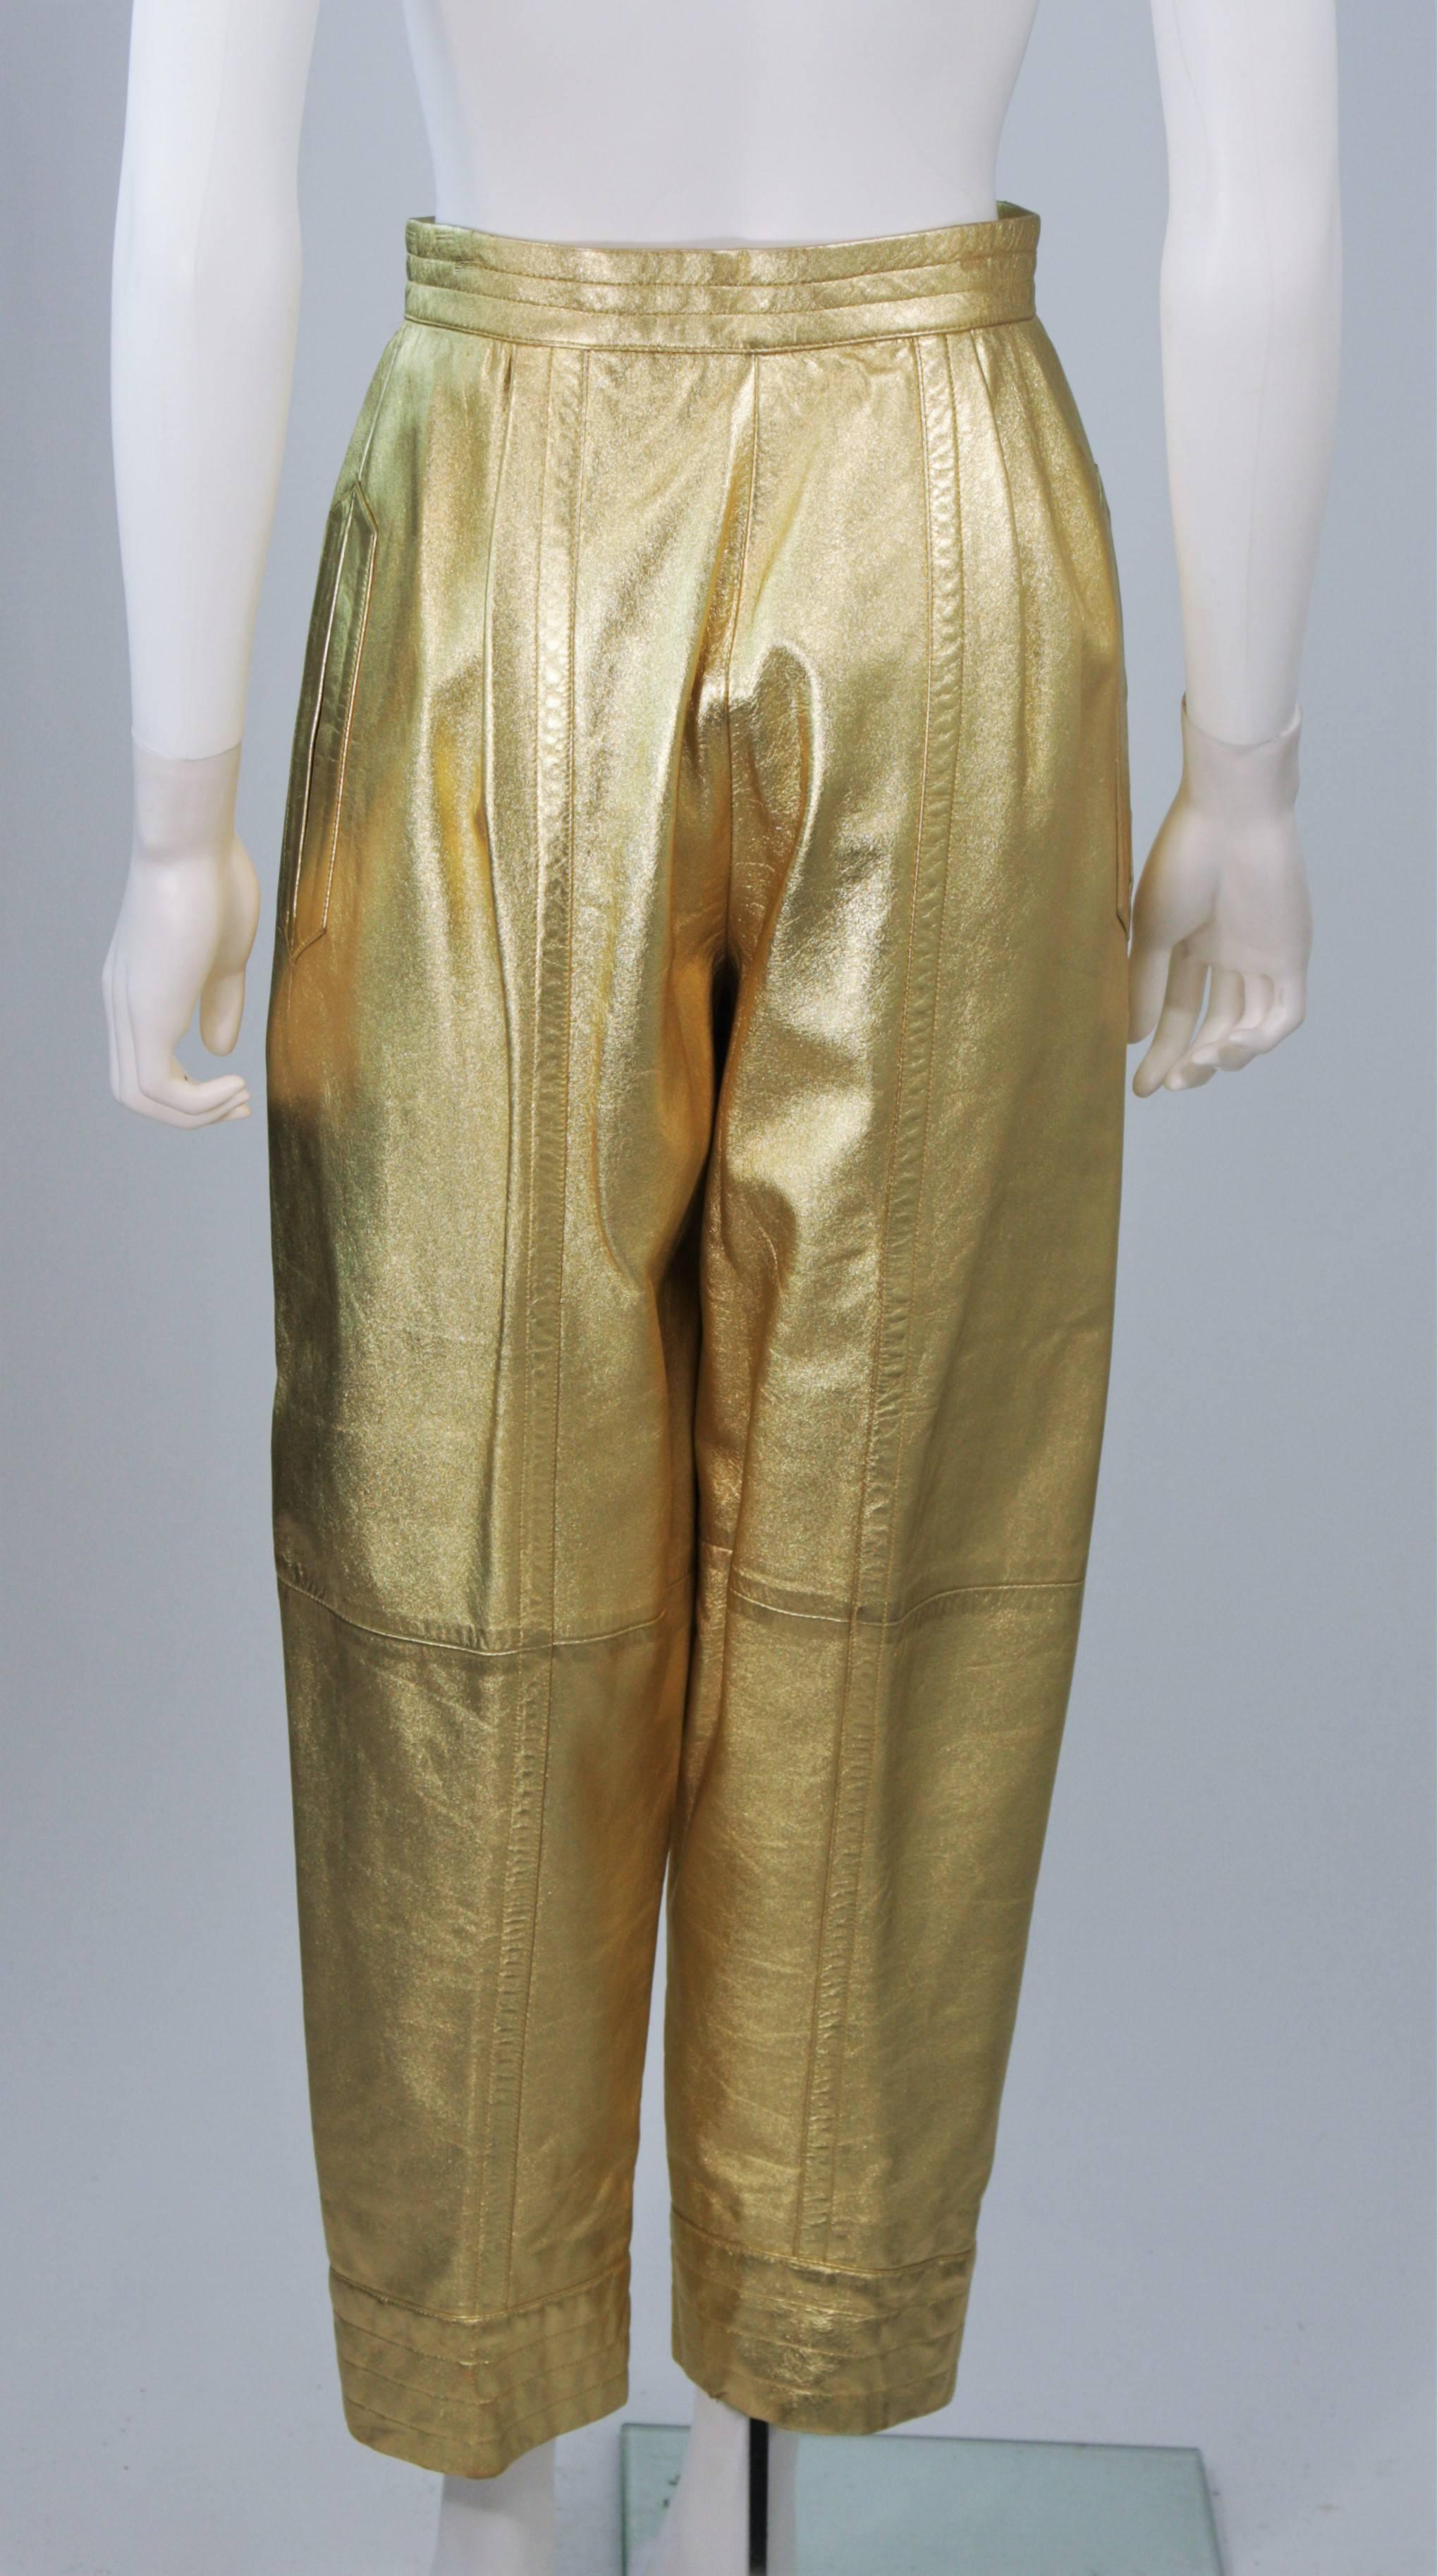 Women's YVES SAINT LAURENT Gold Metallic Foil Leather Pleated Pants Joggers Size 38